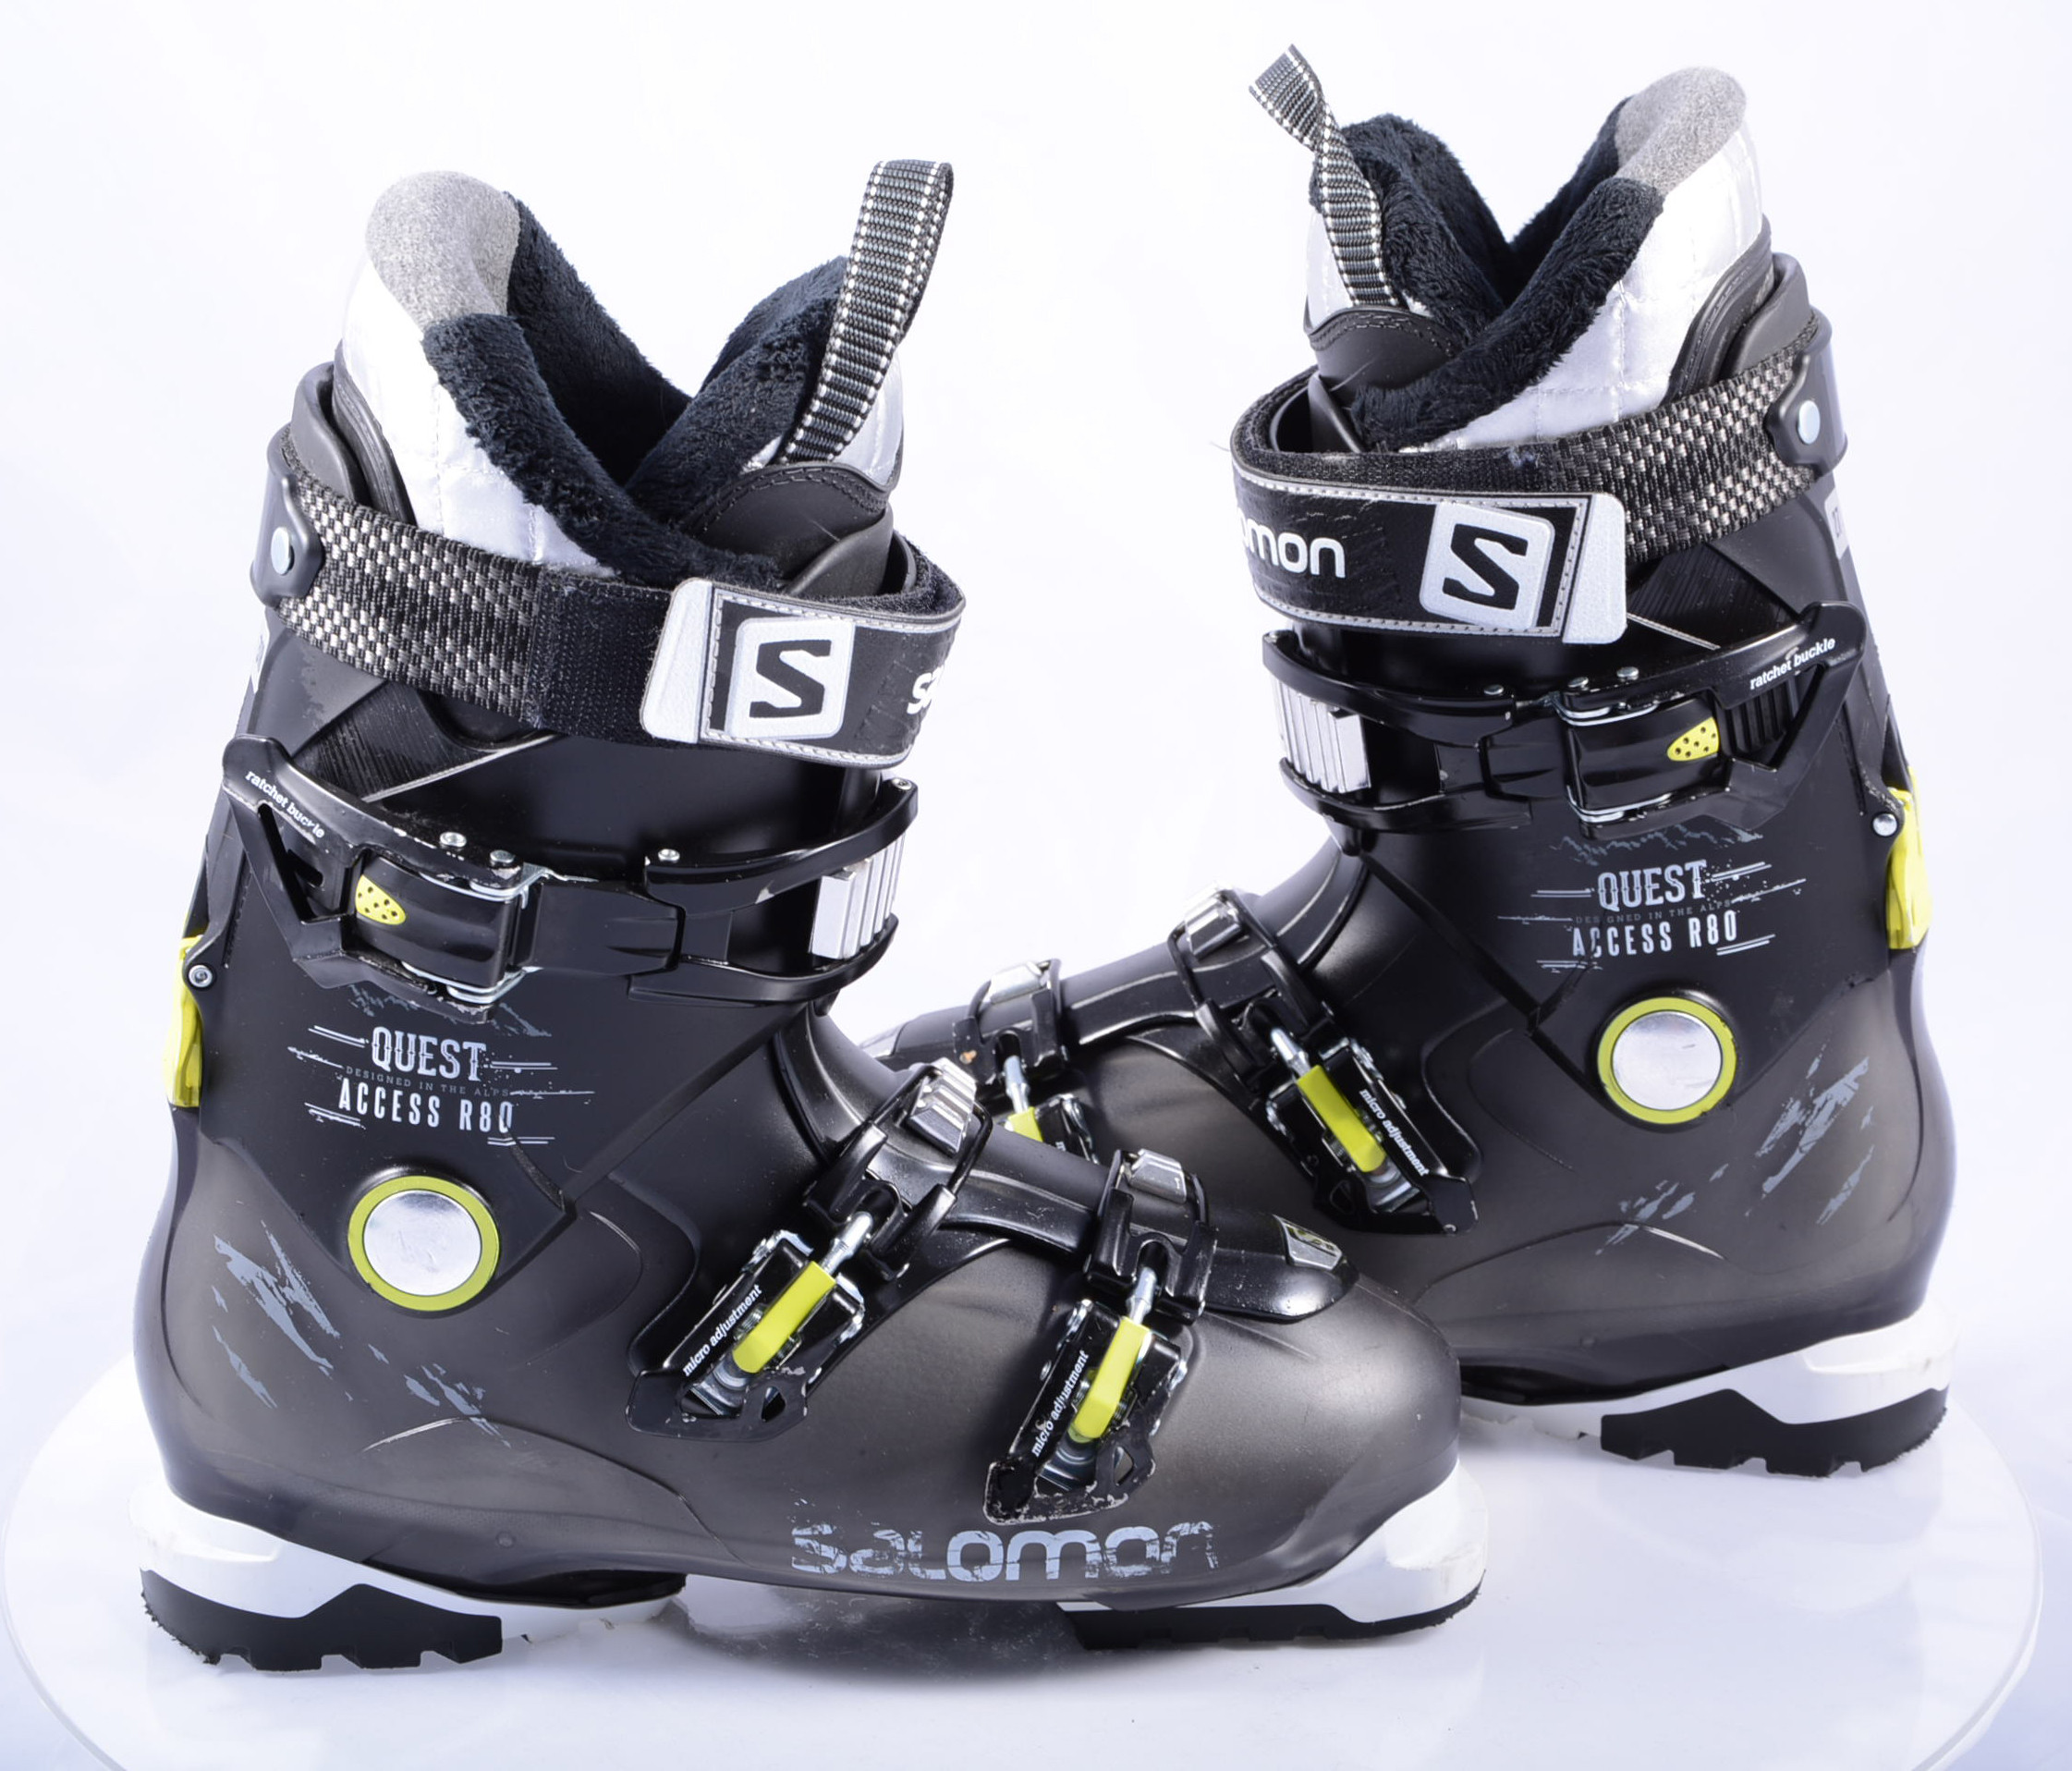 Alarmante Descomponer Saltar ski boots SALOMON QUEST ACCESS R80, Ratchet buckle, SKI/WALK, micro, macro,  BLACK/lime - Mardosport.com